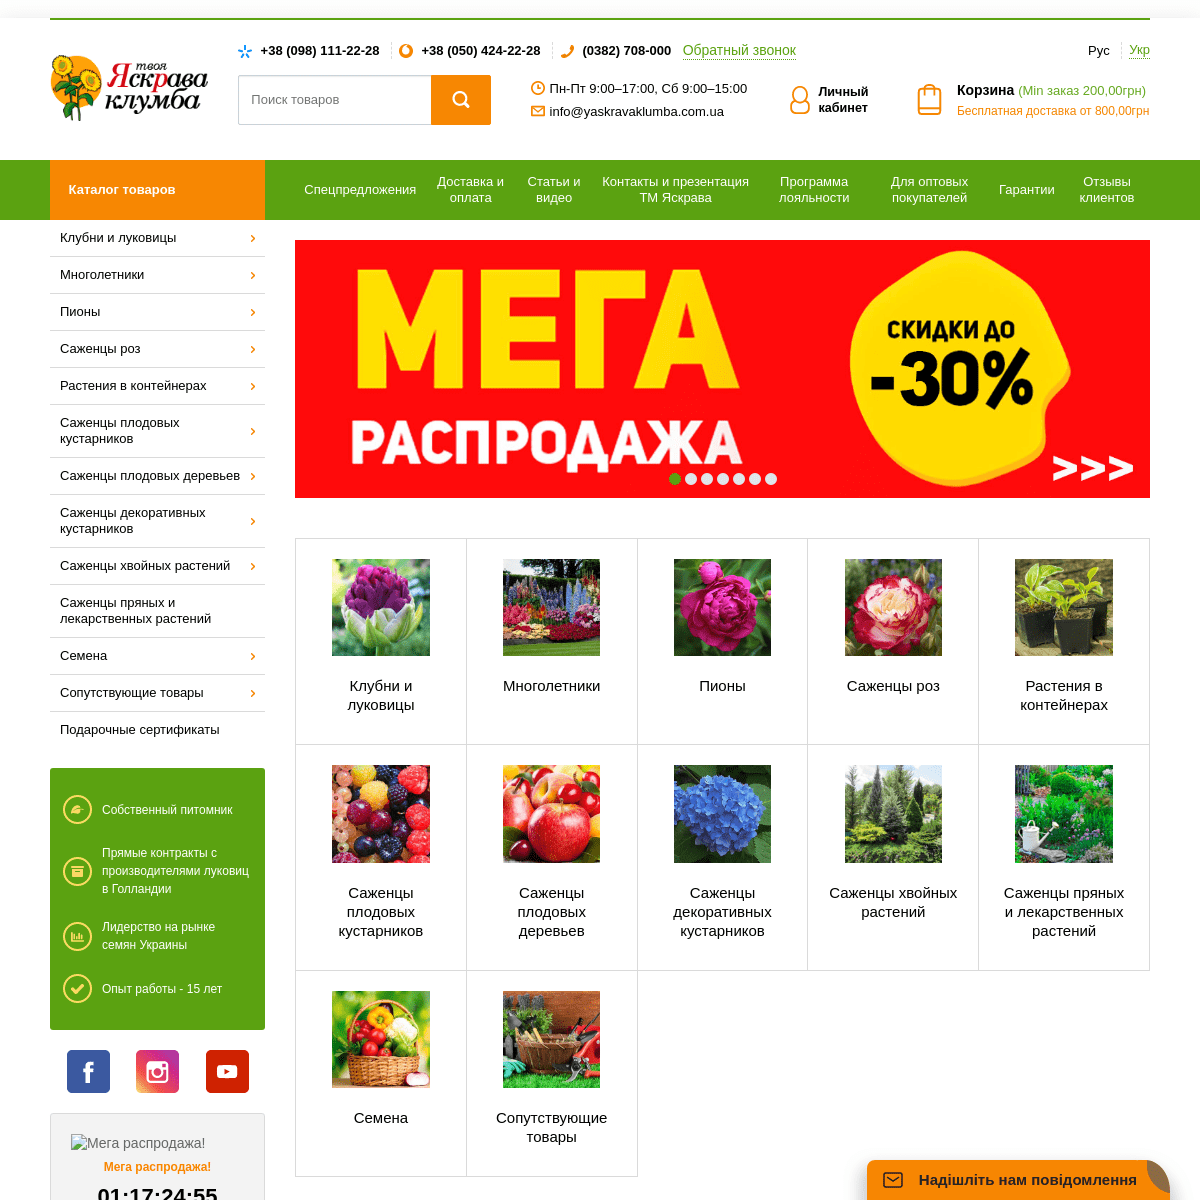 A complete backup of yaskravaklumba.com.ua